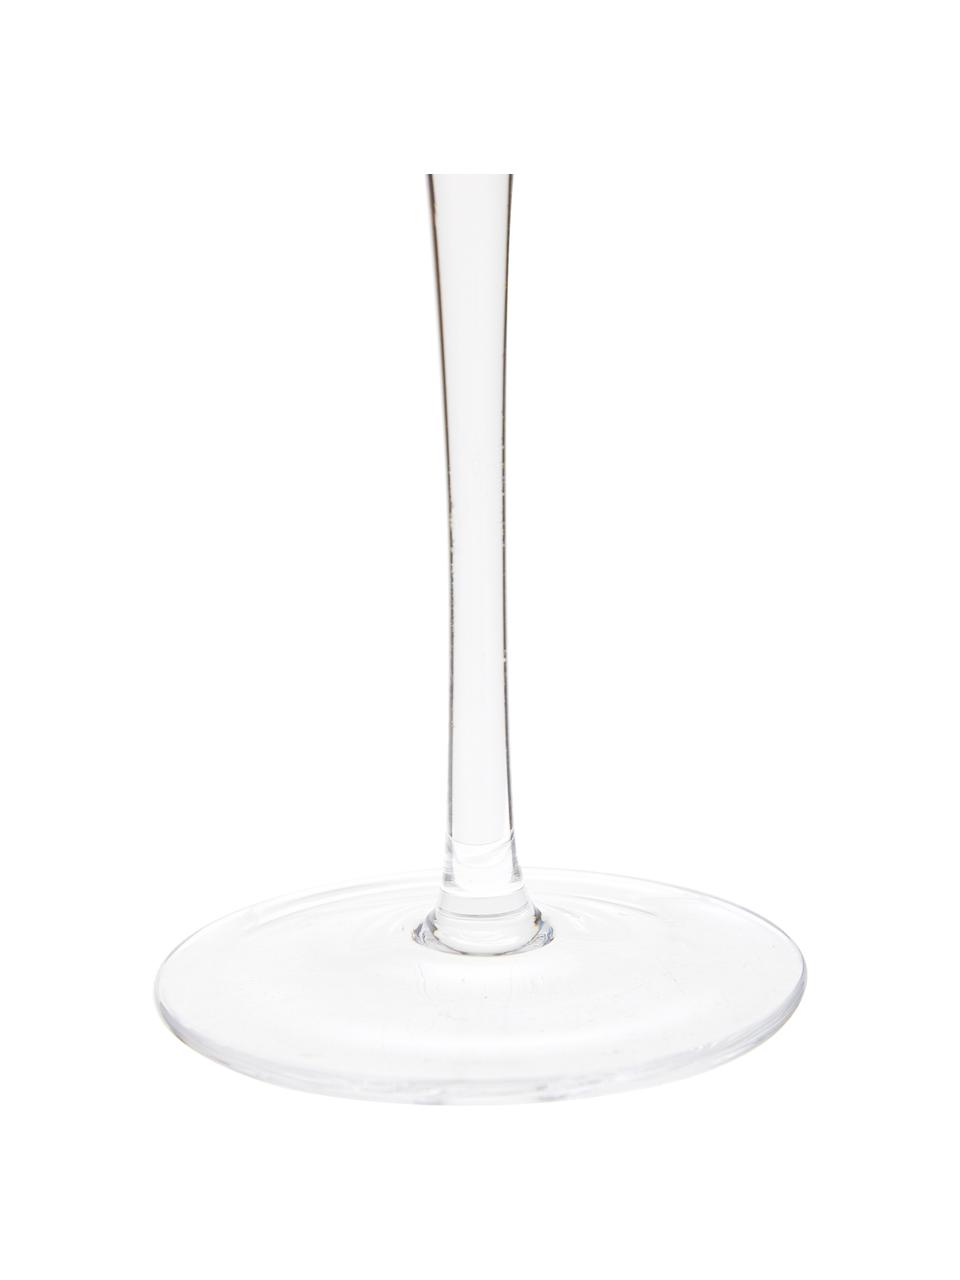 Copas de vino blanco sopladas artesanalmente Ays, 4 uds., Vidrio, Transparente, Ø 6 x Al 24 cm, 418 ml